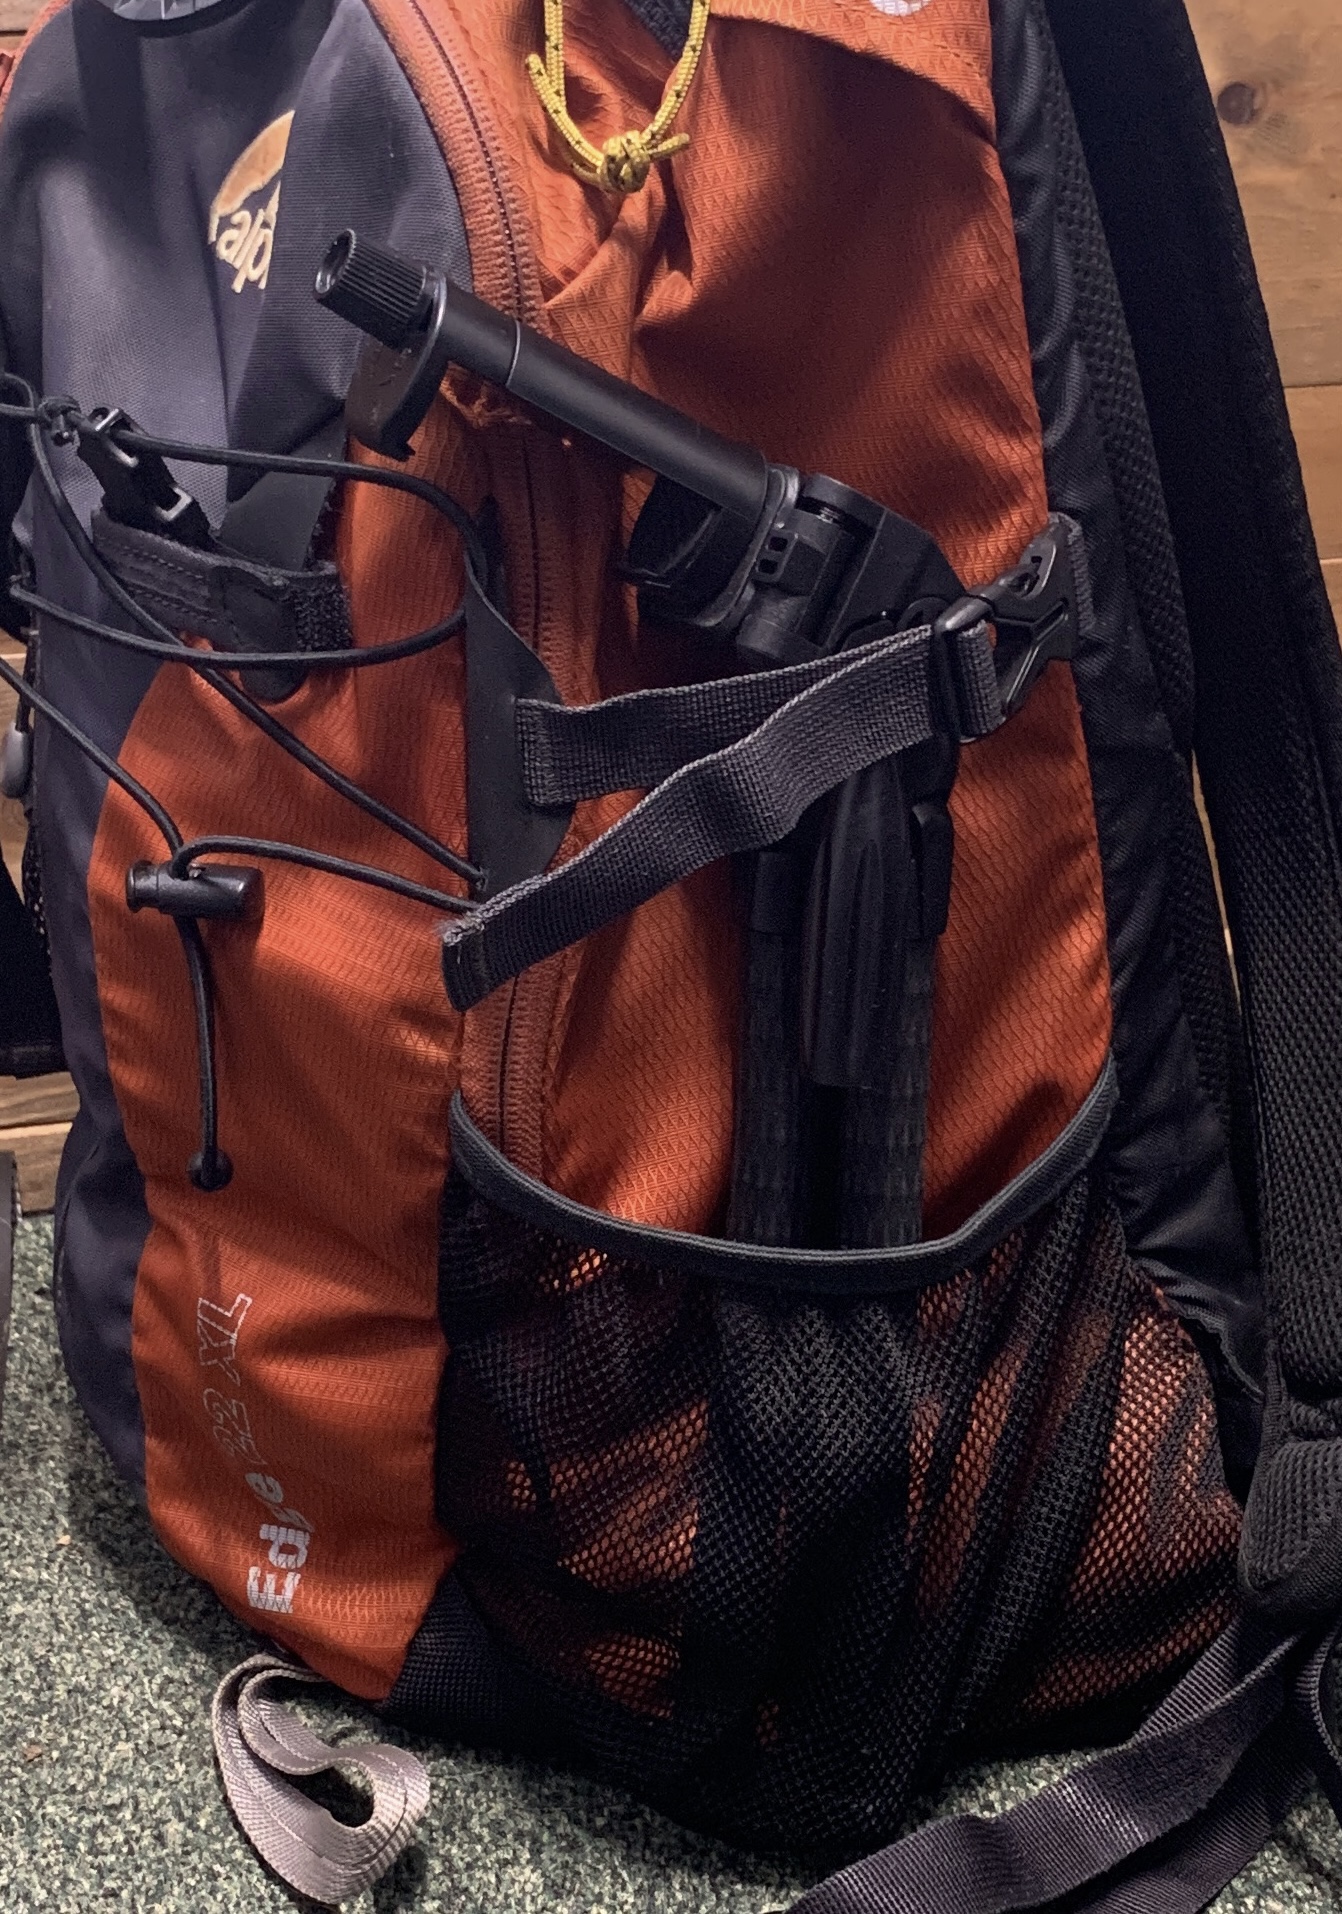 Tripod and backpack